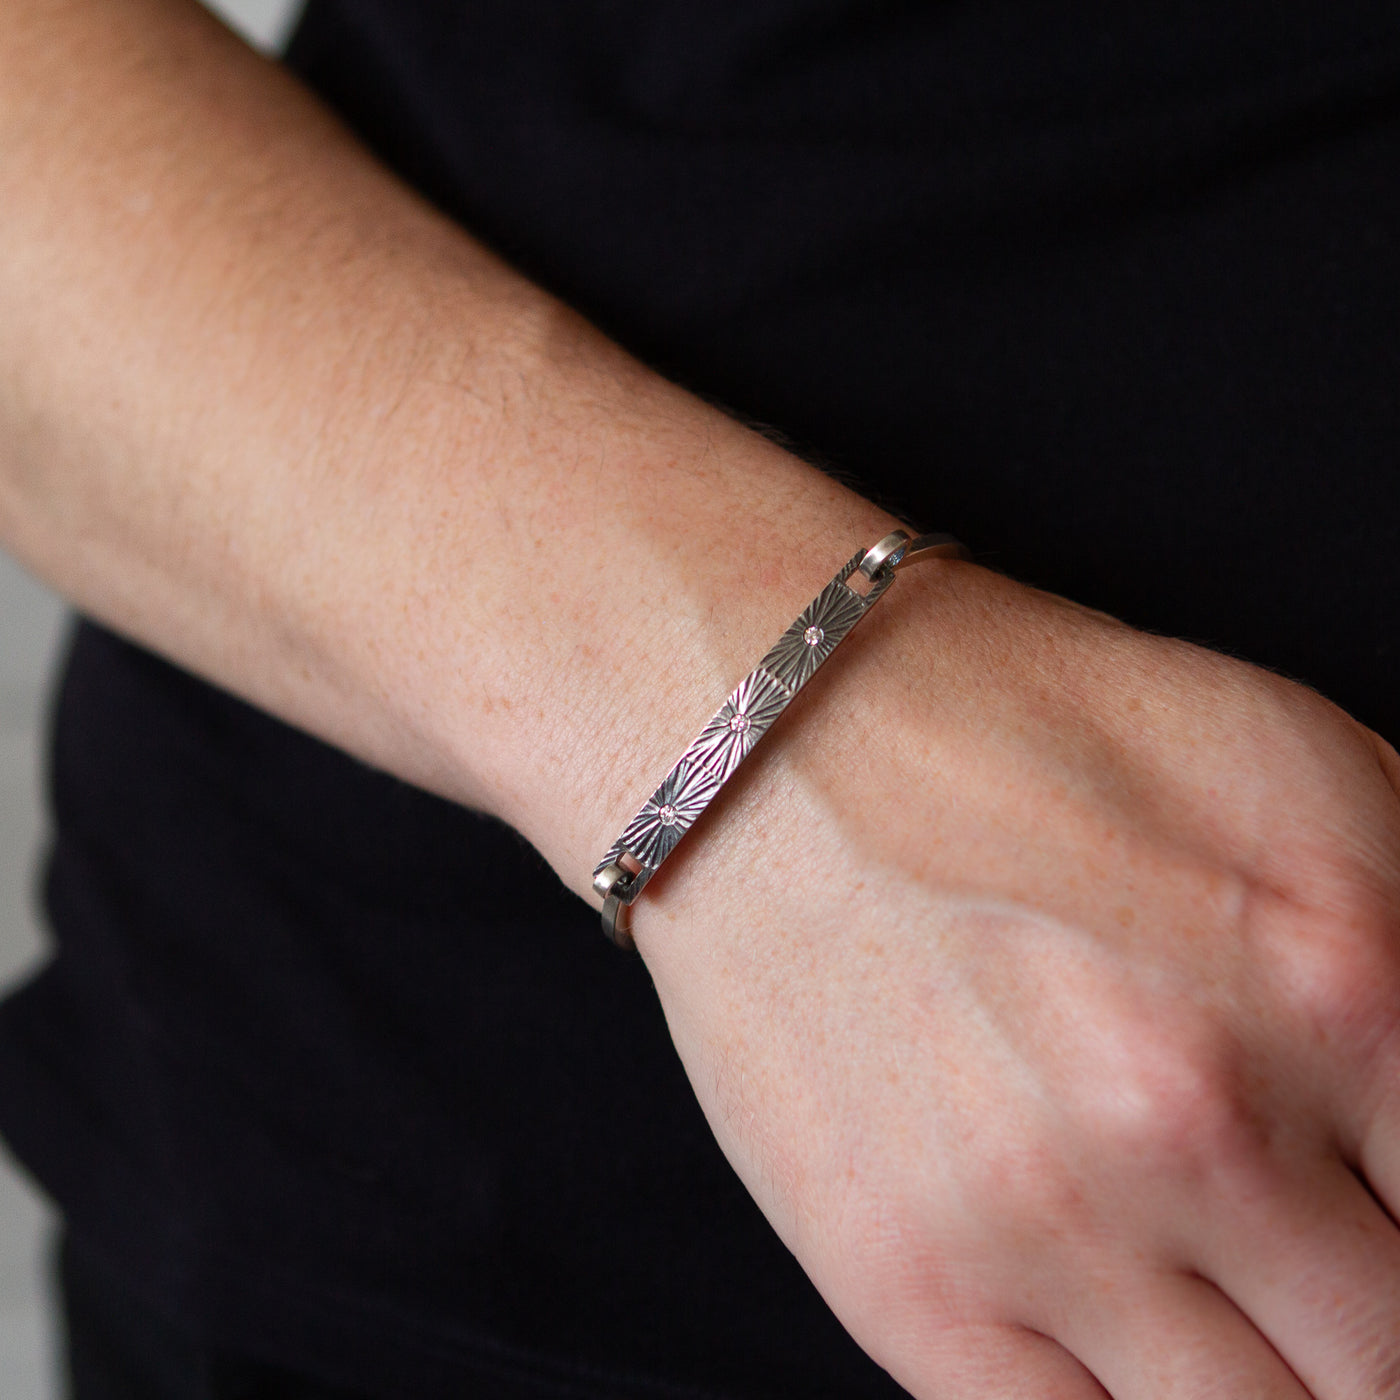 Oxidized sterling silver bar bracelet with three diamonds and a carved sunburst around each on a wrist by Corey Egan